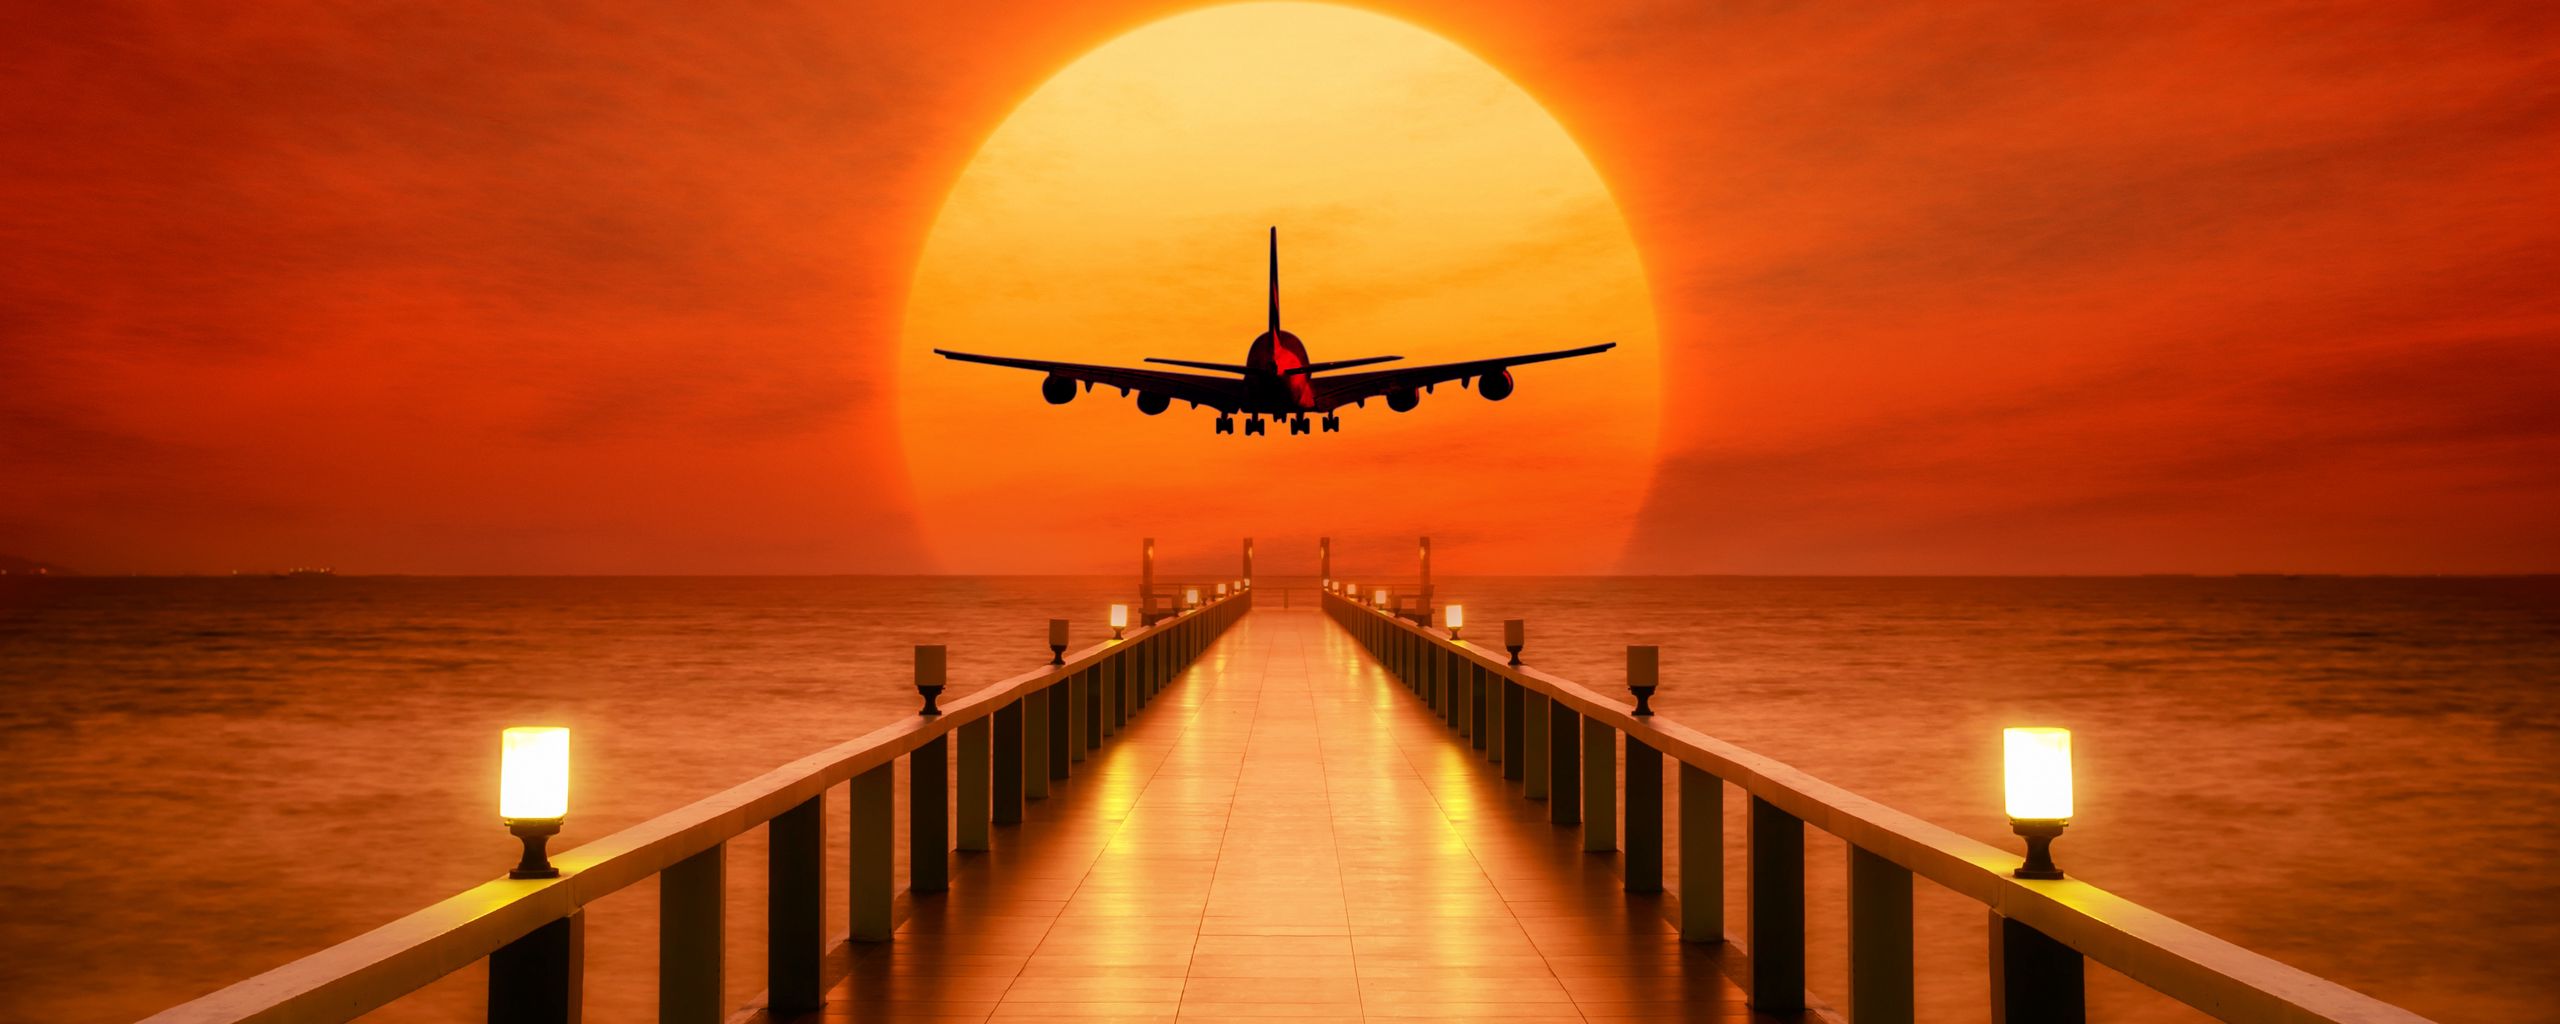 2560x1024 Wallpaper airplane, photoshop, sunset, wharf